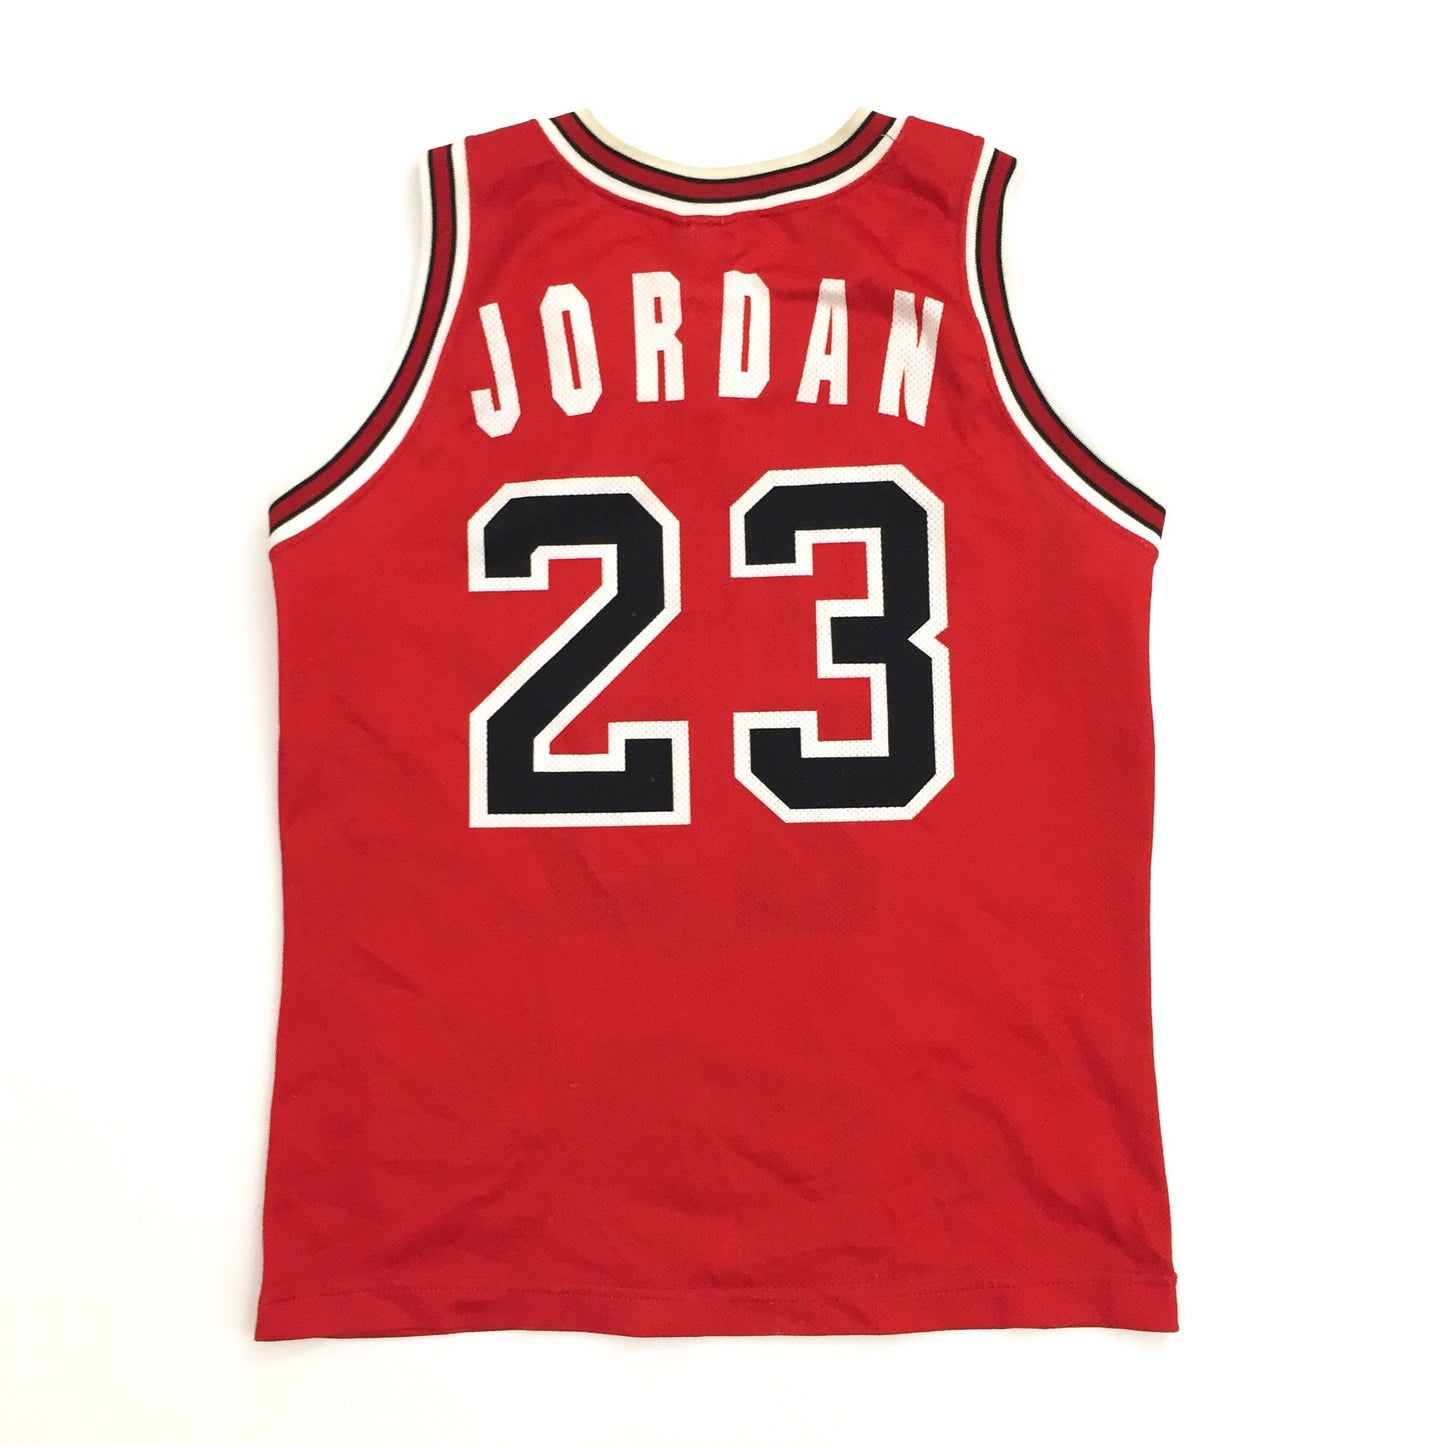 0138 Champion Jordan Chicago Bulls Vintage Jersey